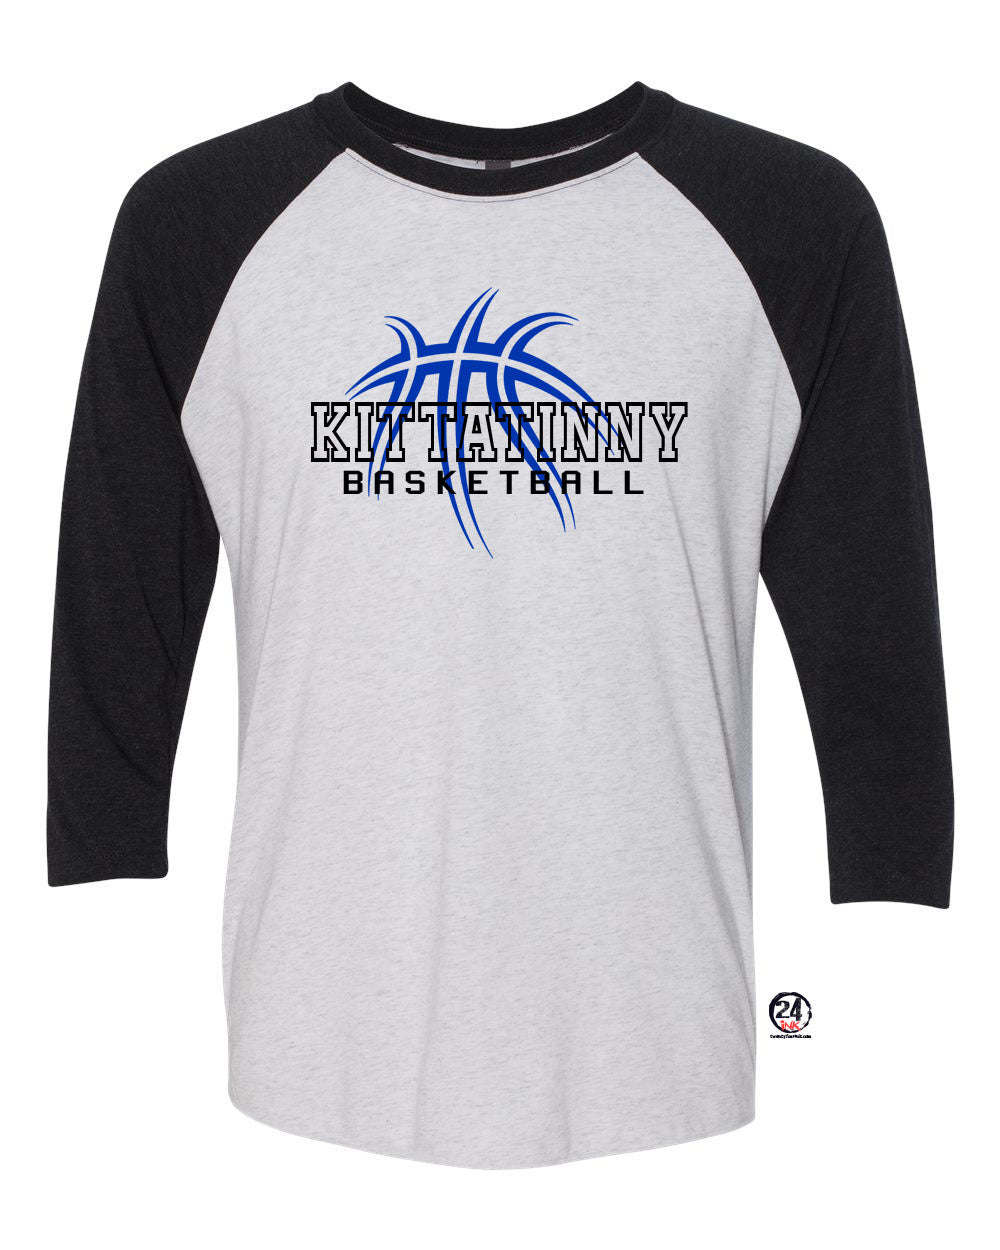 Kittatinny Basketball Design 4 raglan shirt